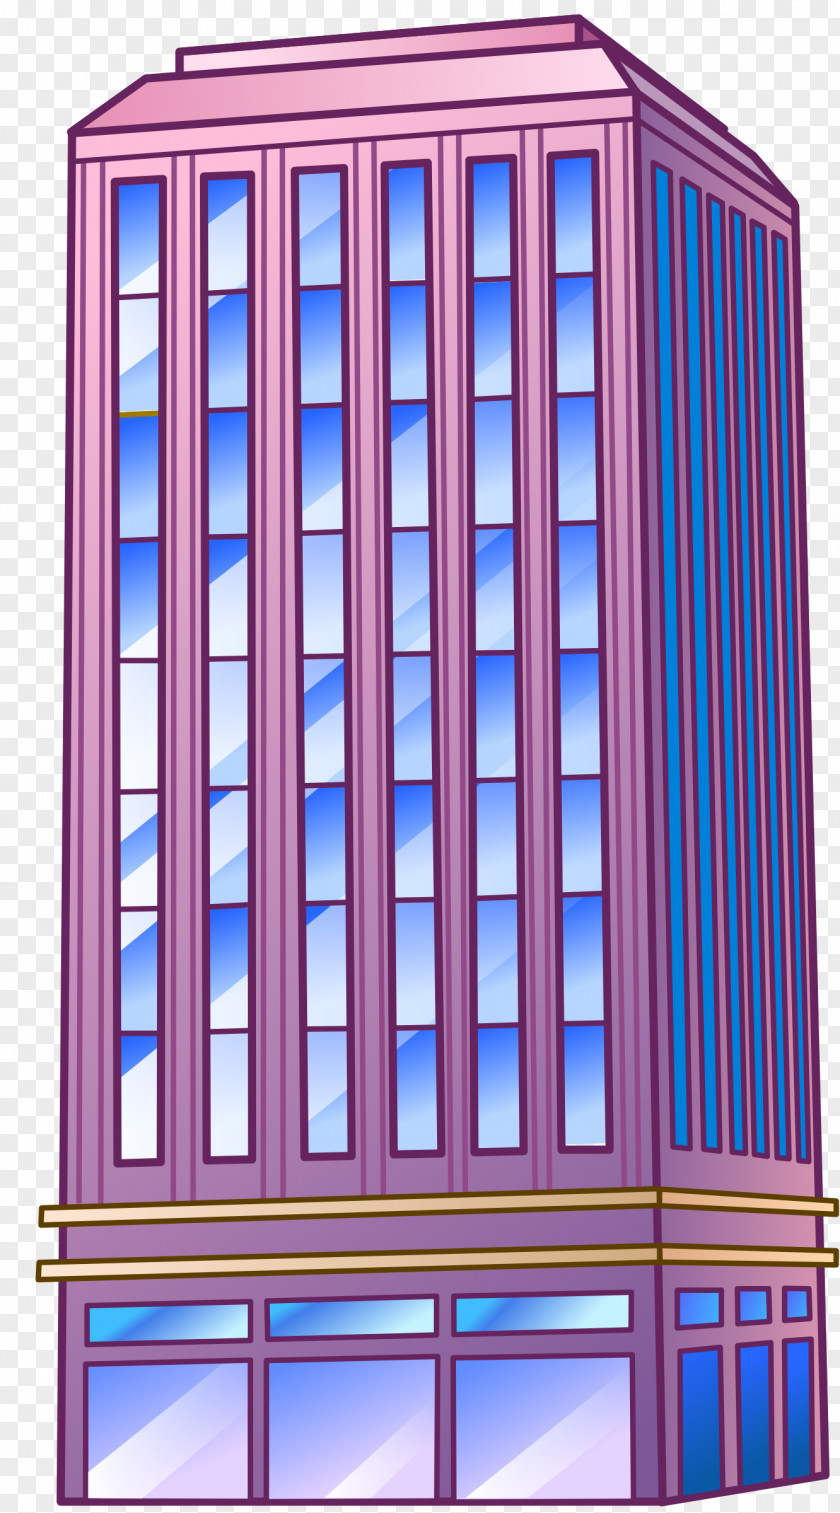 Building Facade Clip Art PNG